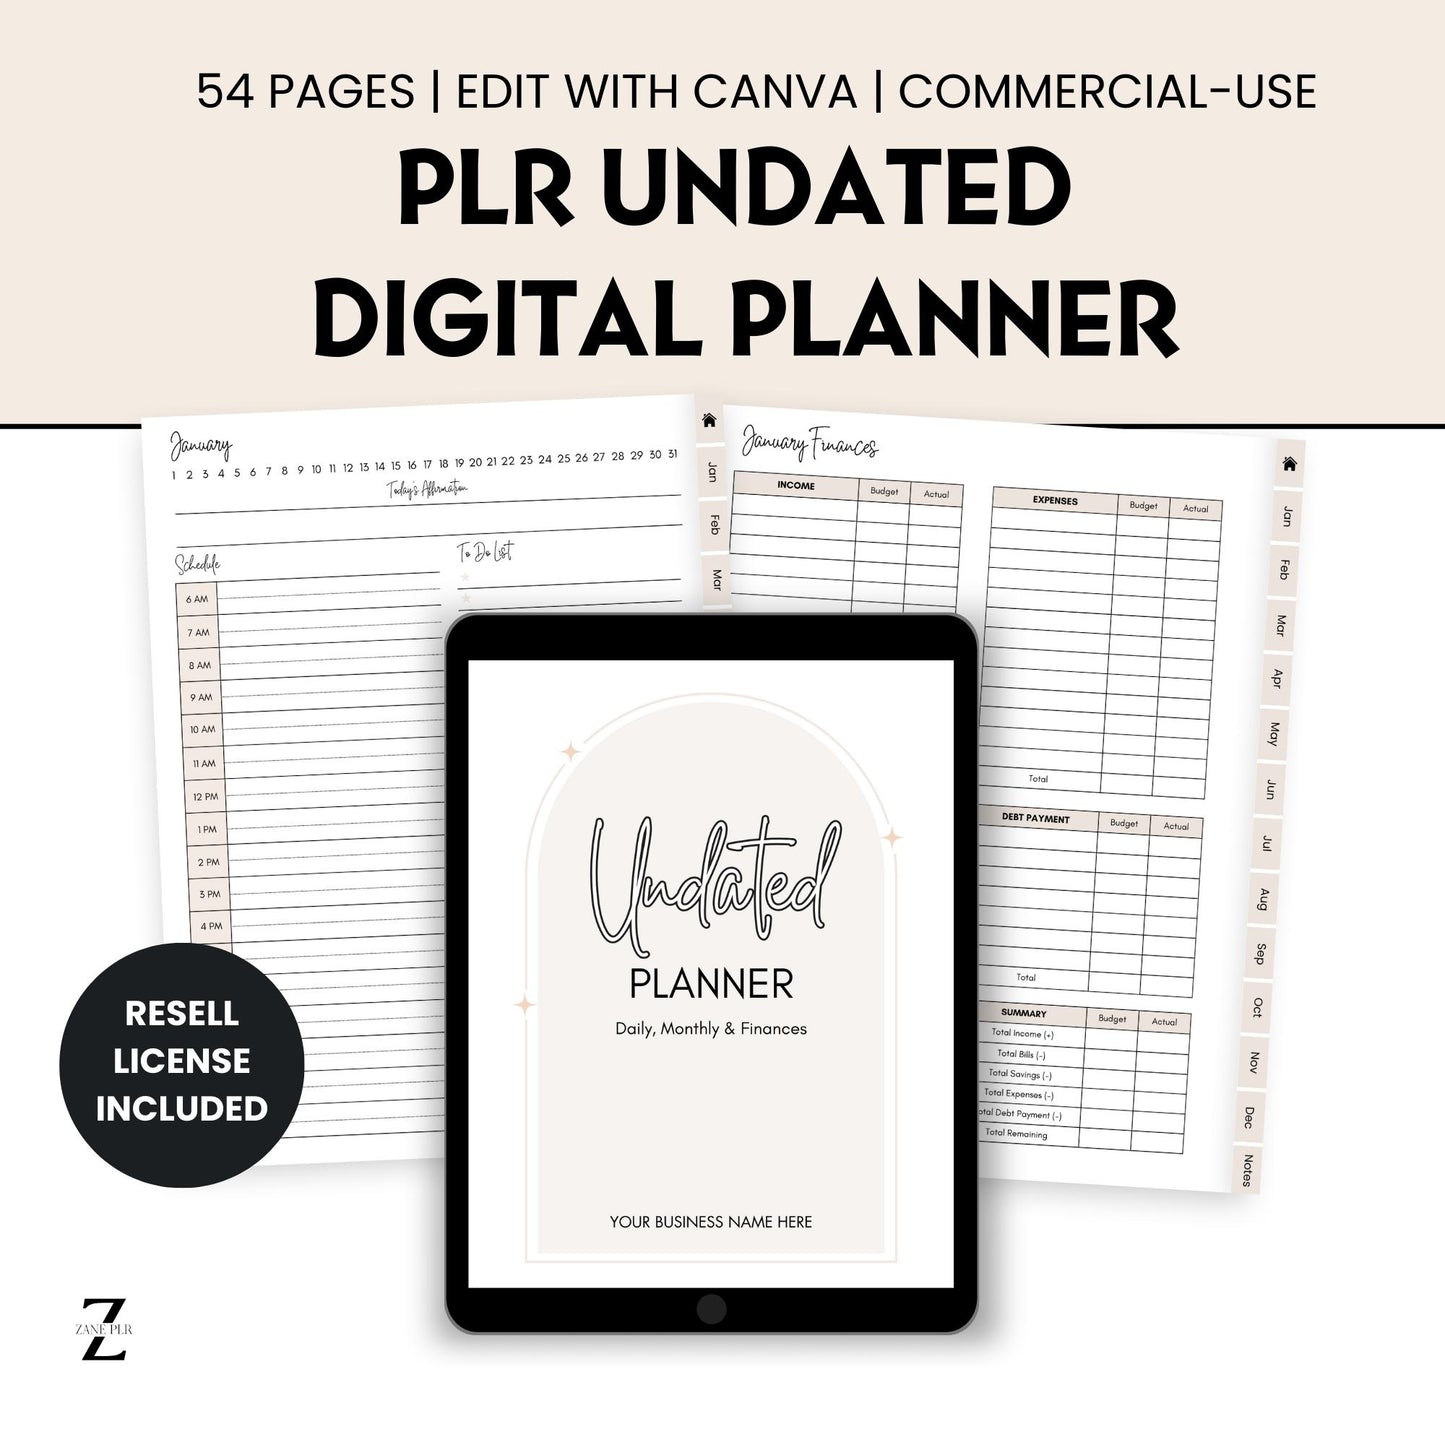 PLR Undated Digital Planner